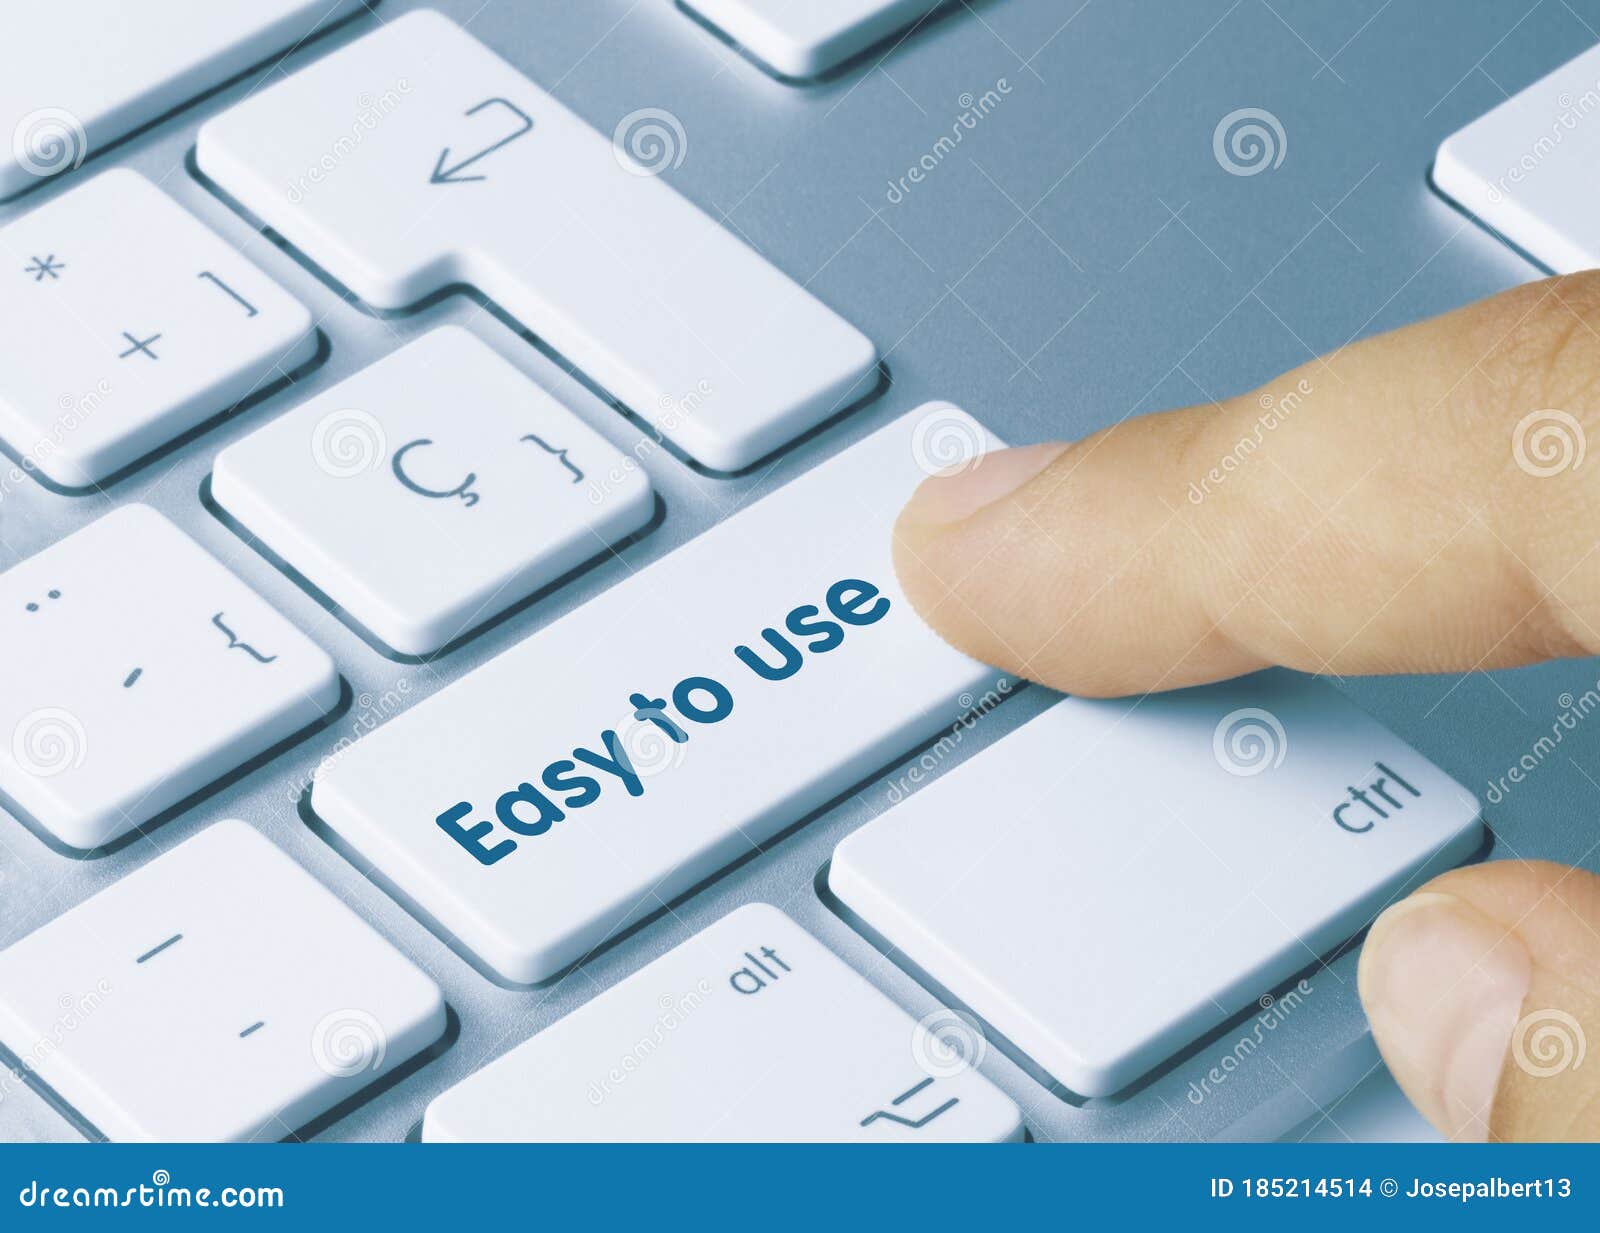 easy to use - inscription on blue keyboard key